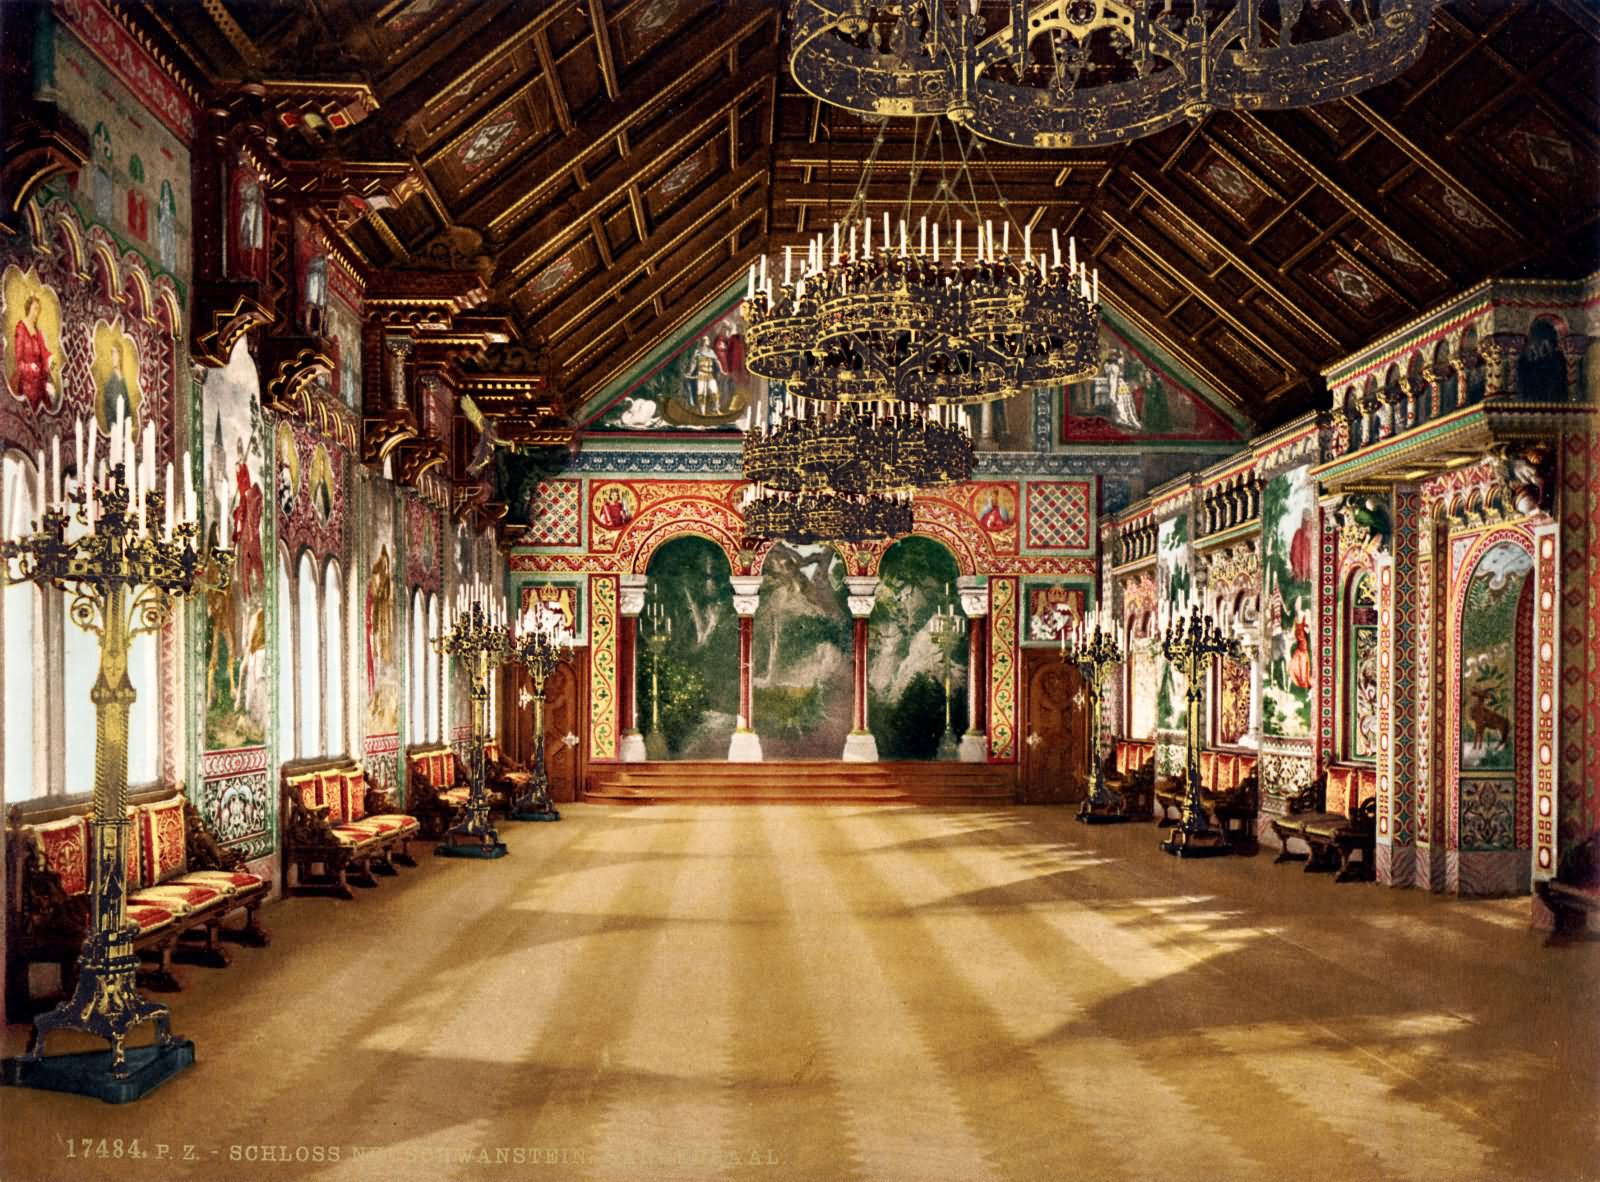 The Singer's Hall Inside The Neuschwanstein Castle